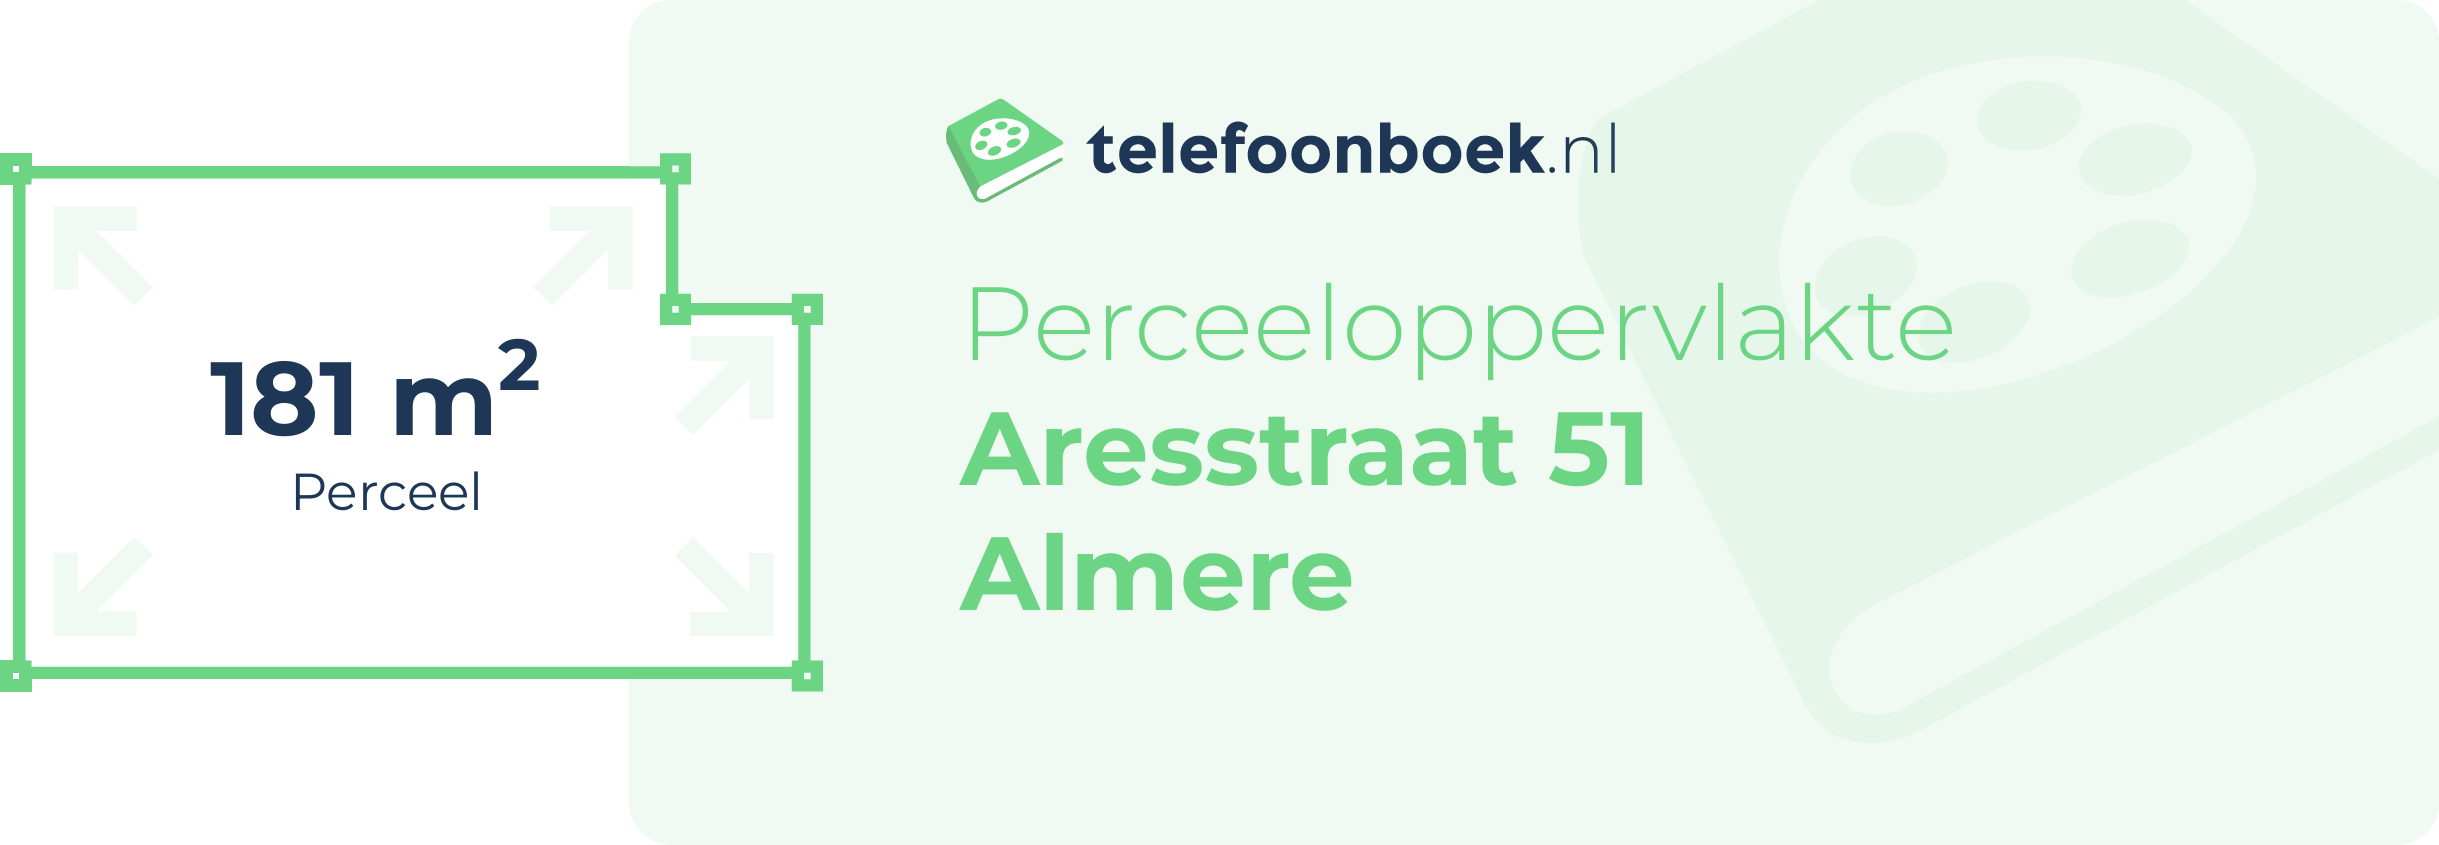 Perceeloppervlakte Aresstraat 51 Almere